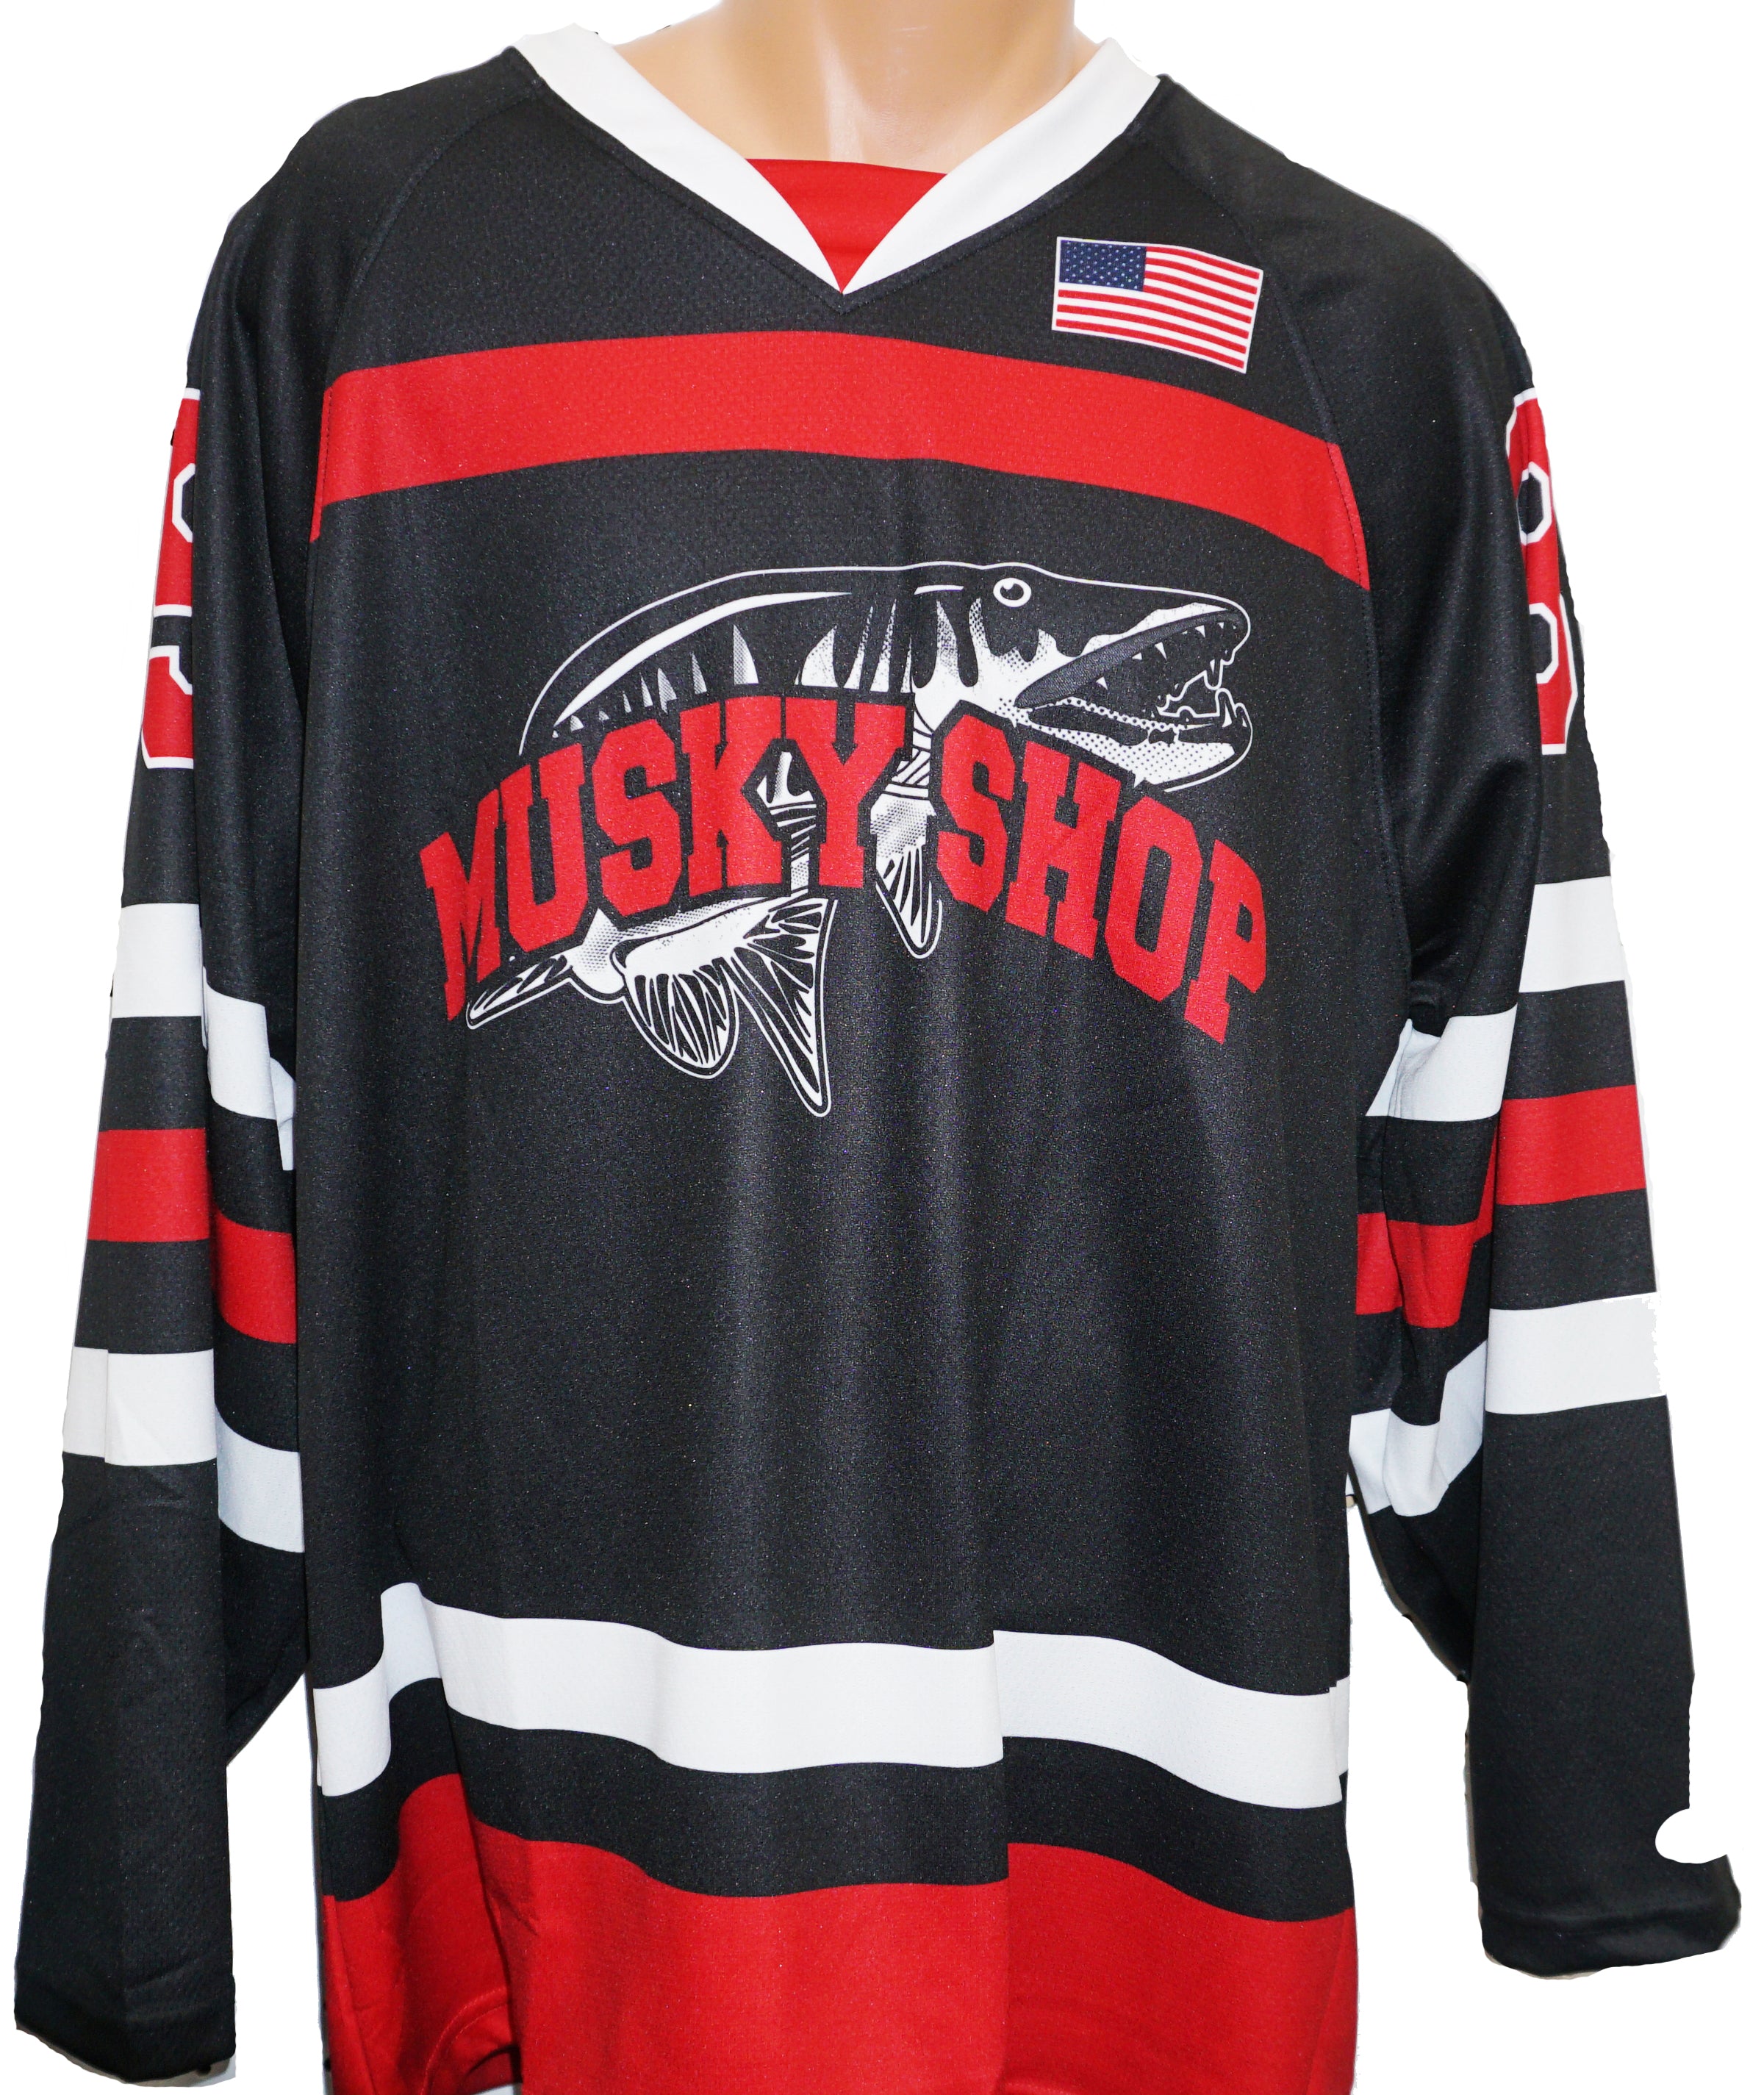 Musky Shop Custom Hockey Jersey Large